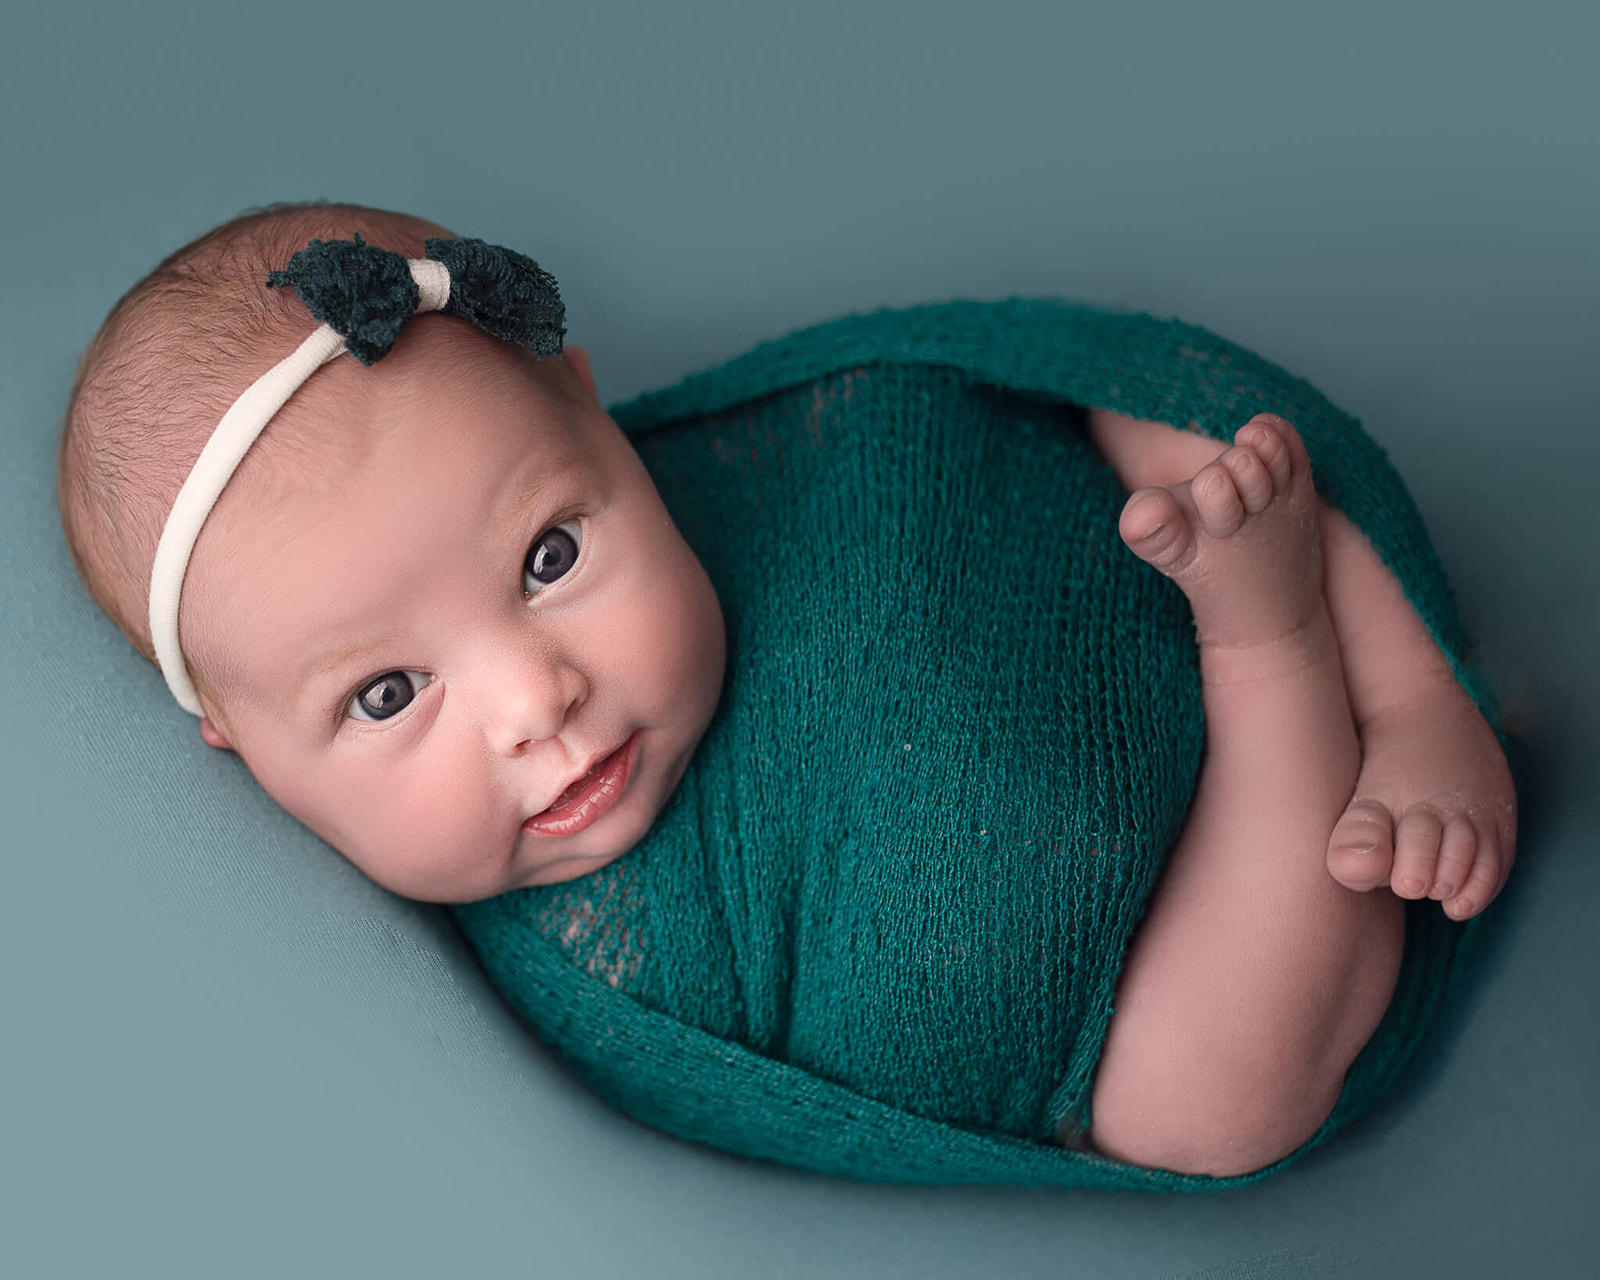 Akron OH newborn photographer captures happy newborn